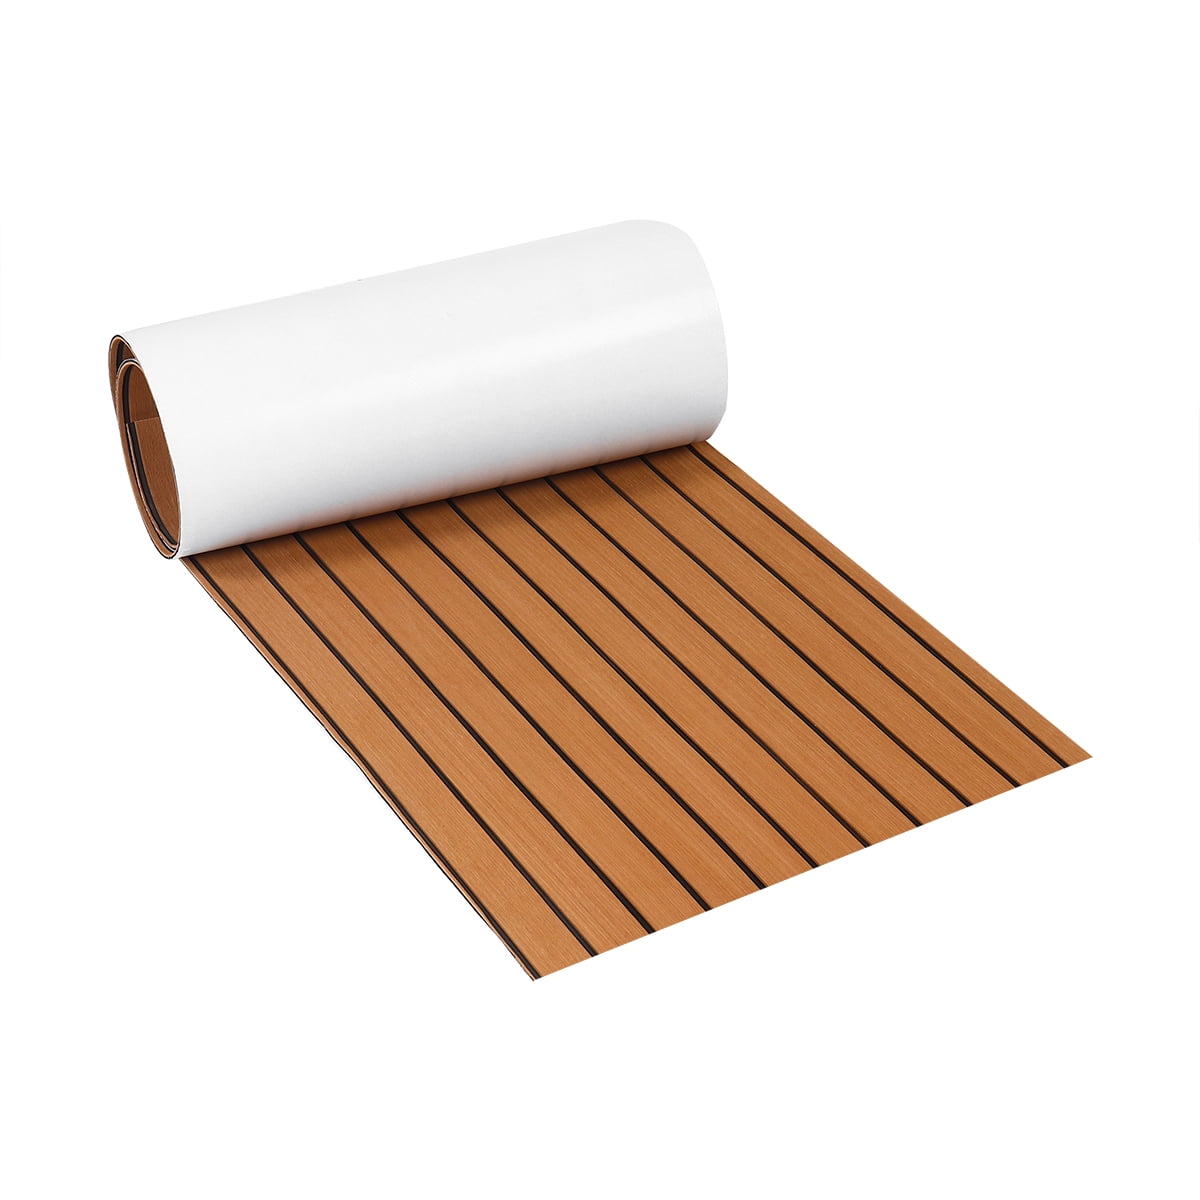 L Size Boat Decking Sheet Marine Teak Flooring Carpet EVA Foam Mat Light Brown